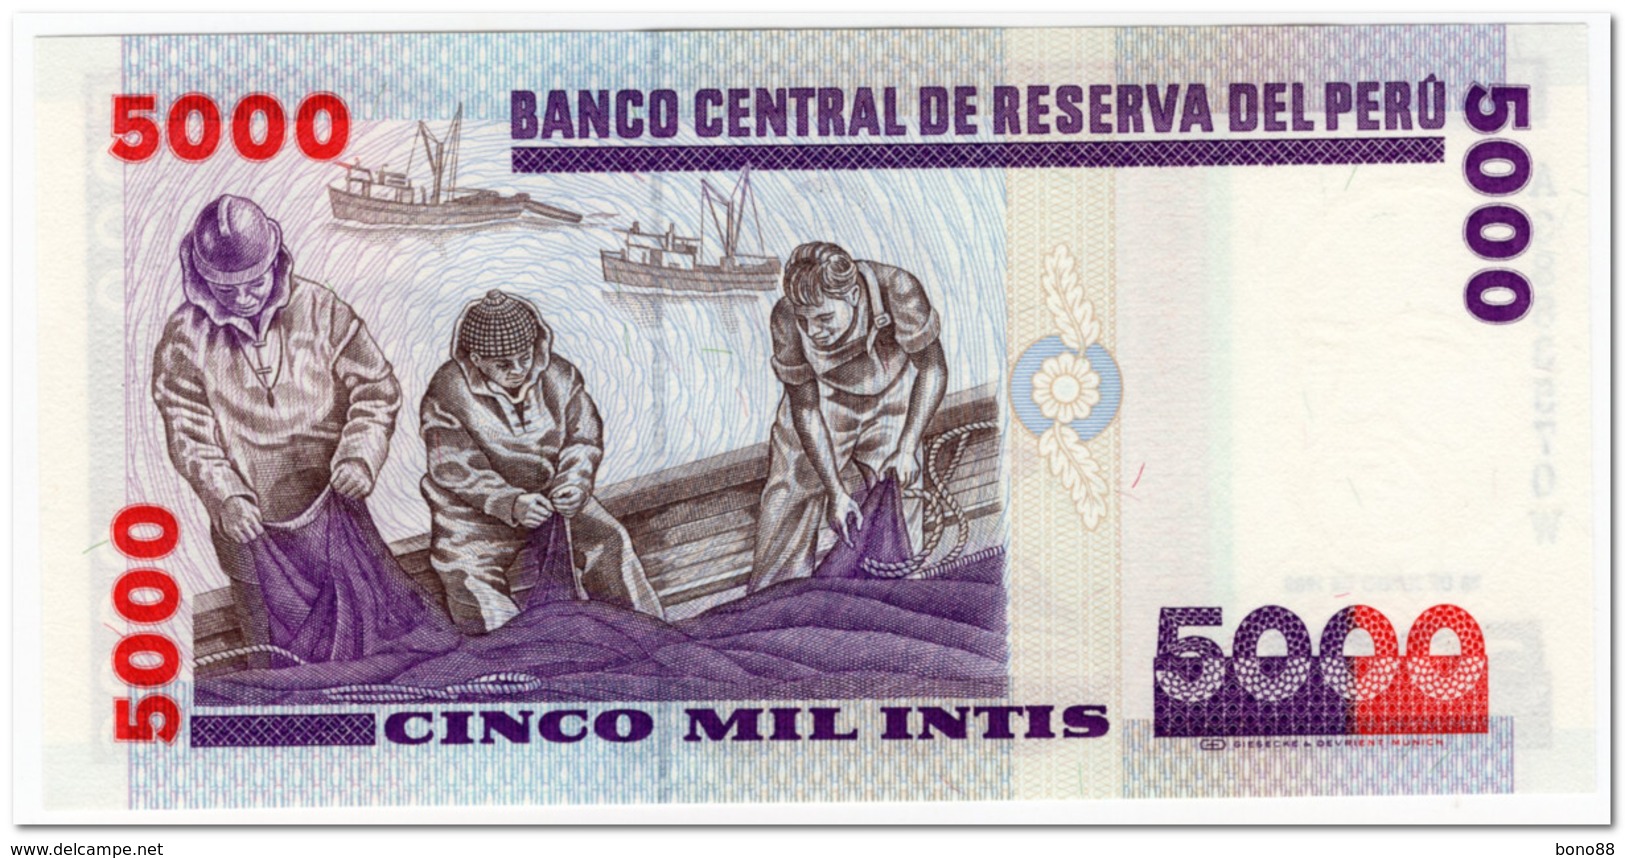 PERU,5000 INTIS, 28.6.1988,P.137,UNC - Peru